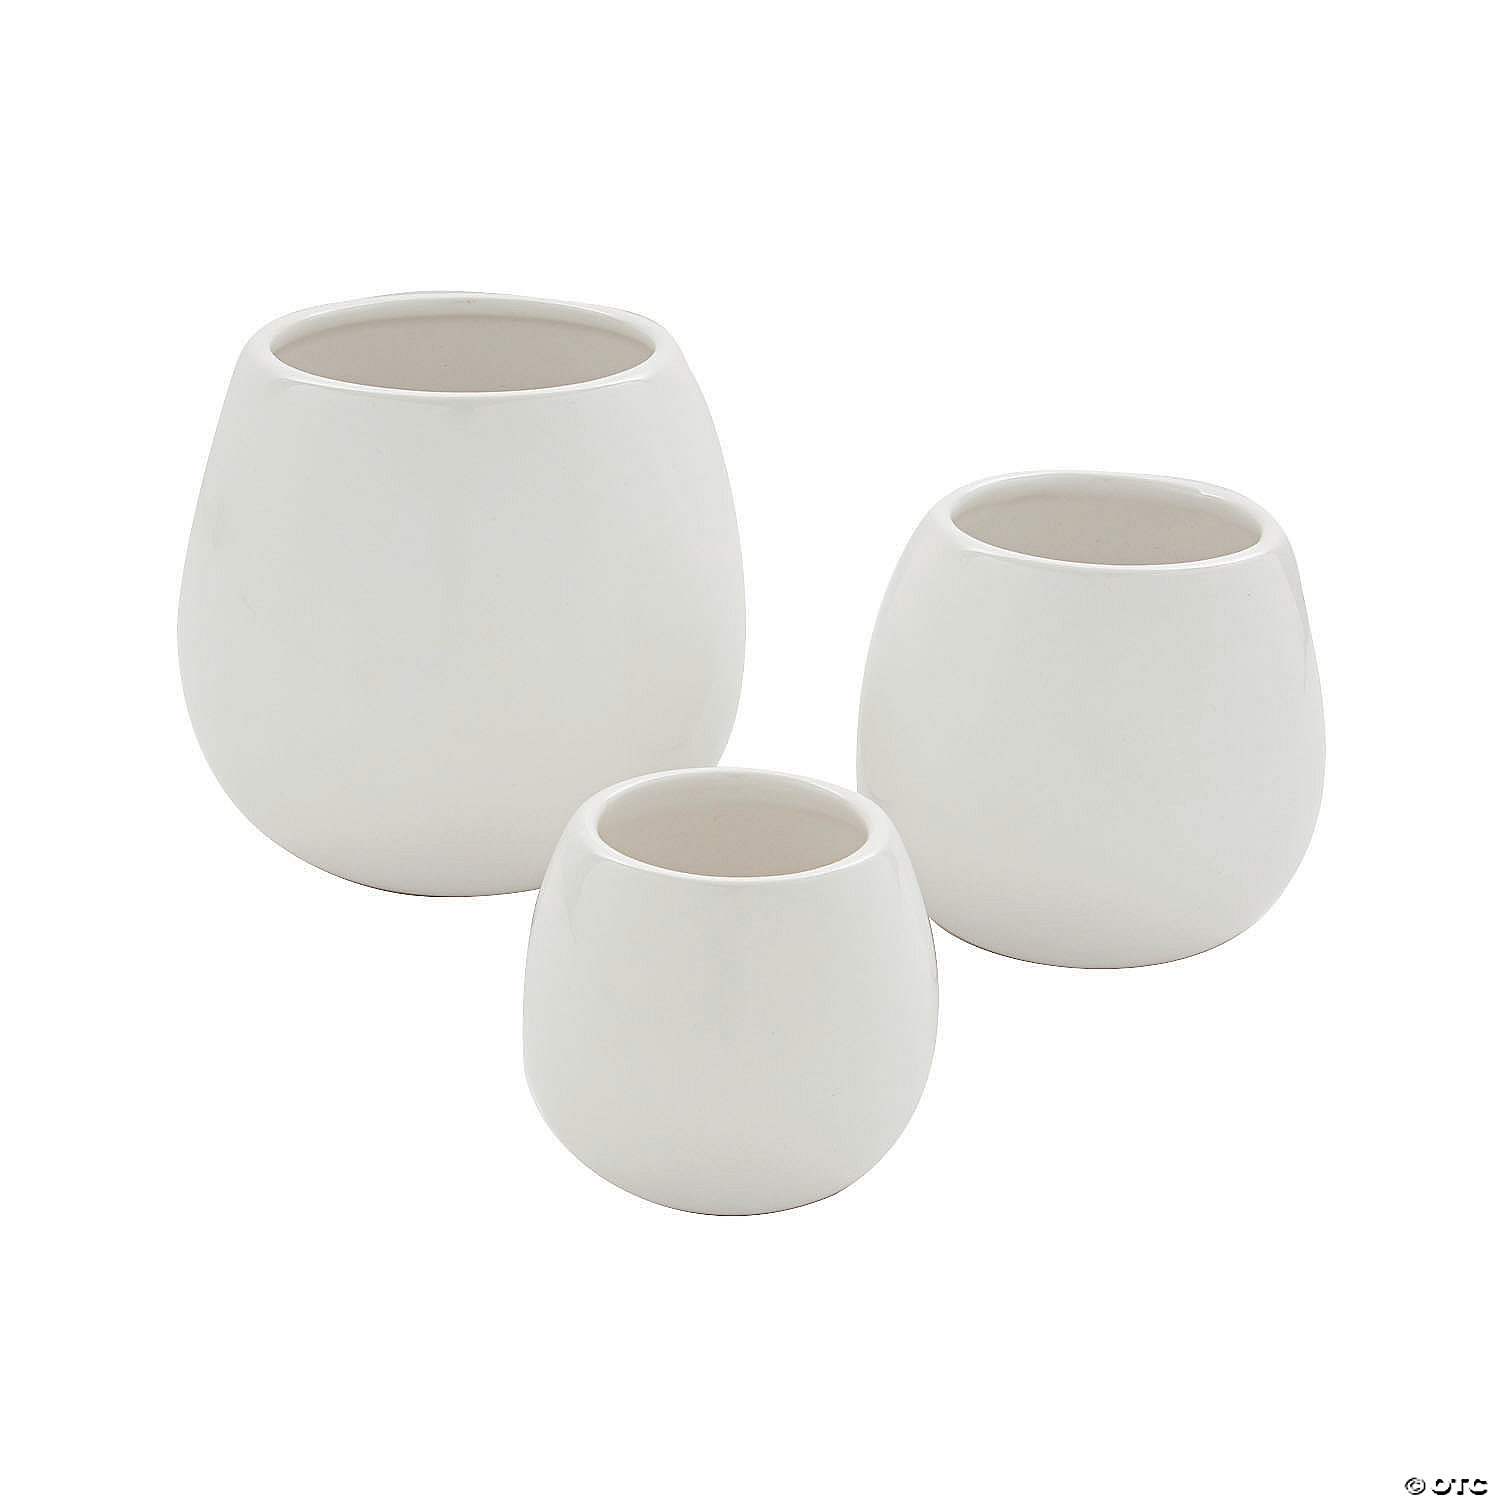 6inch Japanese White Ceramic Decorative Tabletop Centerpiece Flower Pot #3 